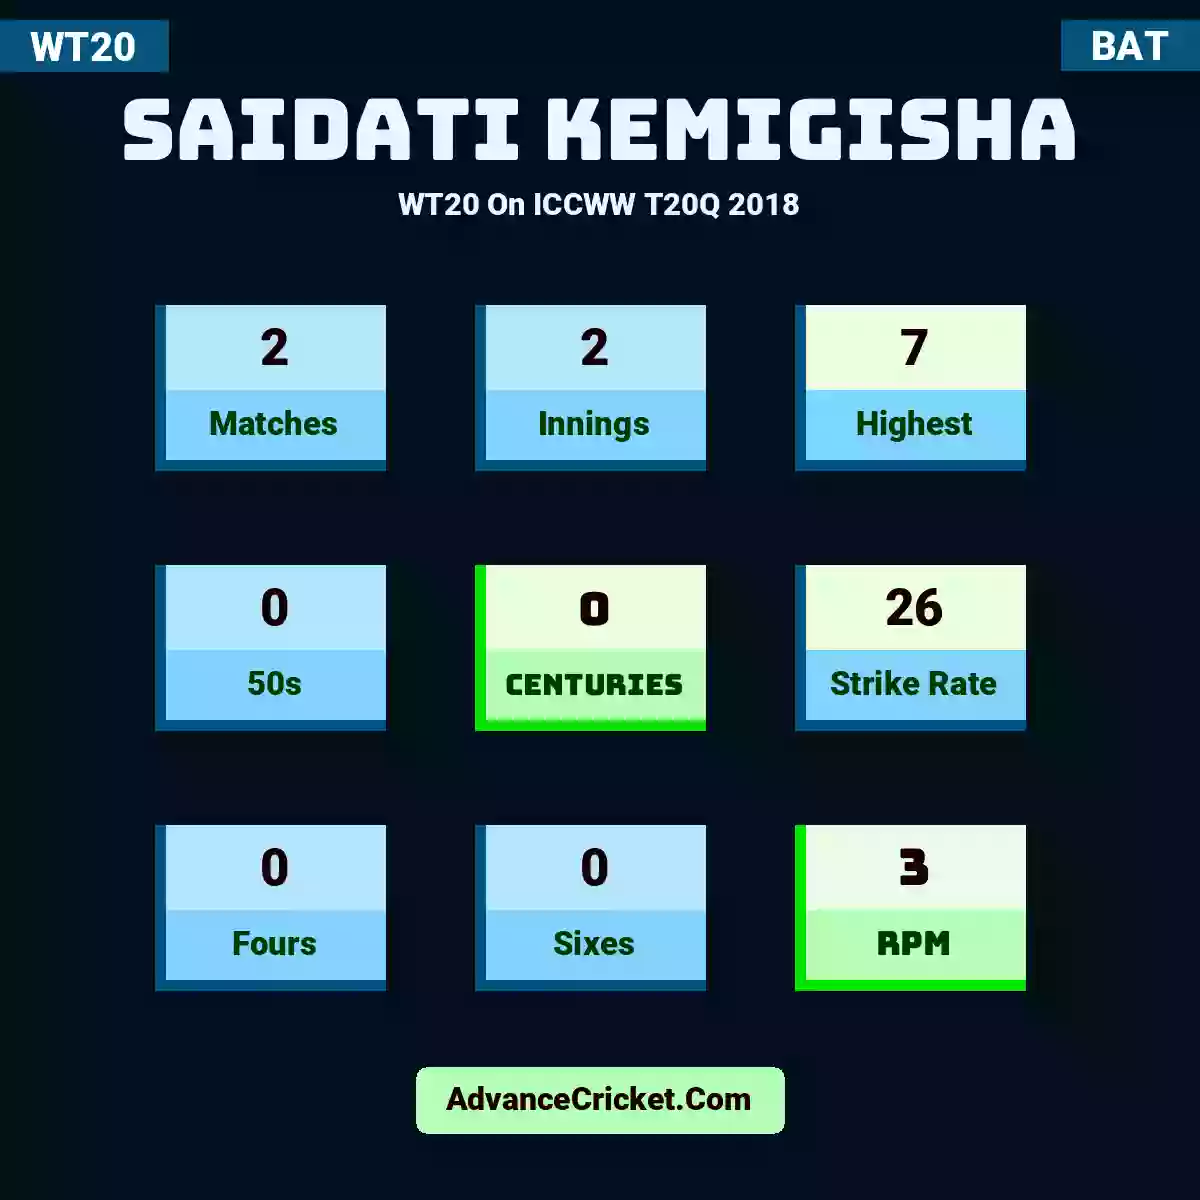 Saidati Kemigisha WT20  On ICCWW T20Q 2018, Saidati Kemigisha played 2 matches, scored 7 runs as highest, 0 half-centuries, and 0 centuries, with a strike rate of 26. S.Kemigisha hit 0 fours and 0 sixes, with an RPM of 3.